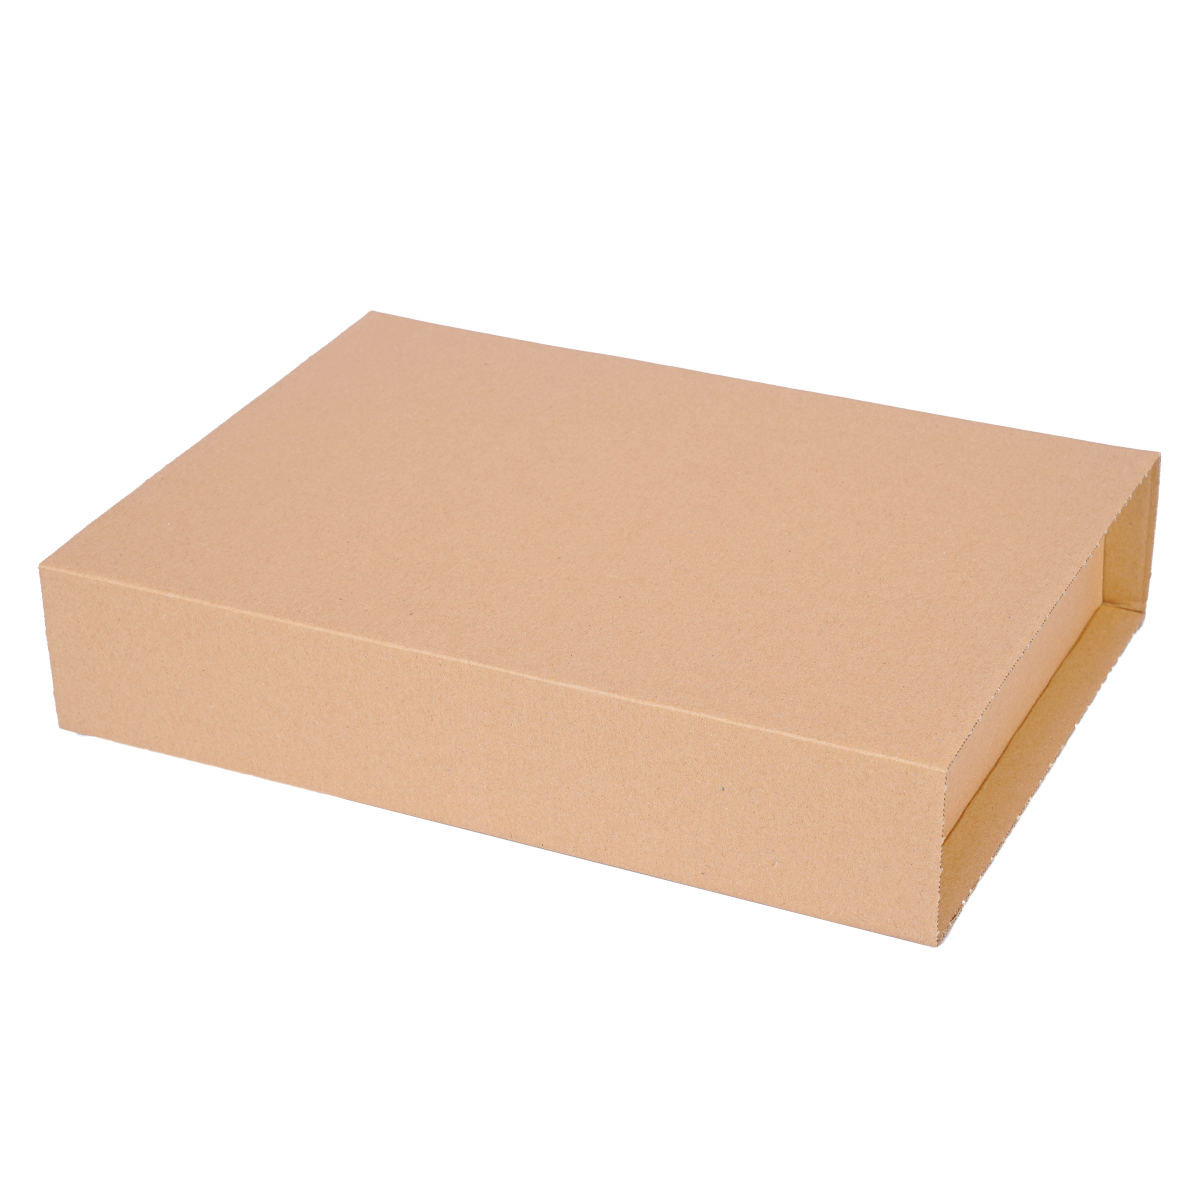 Buchverpackung 310x250x20-70 mm Wickelverpackung aus Pappe braun - BV 4